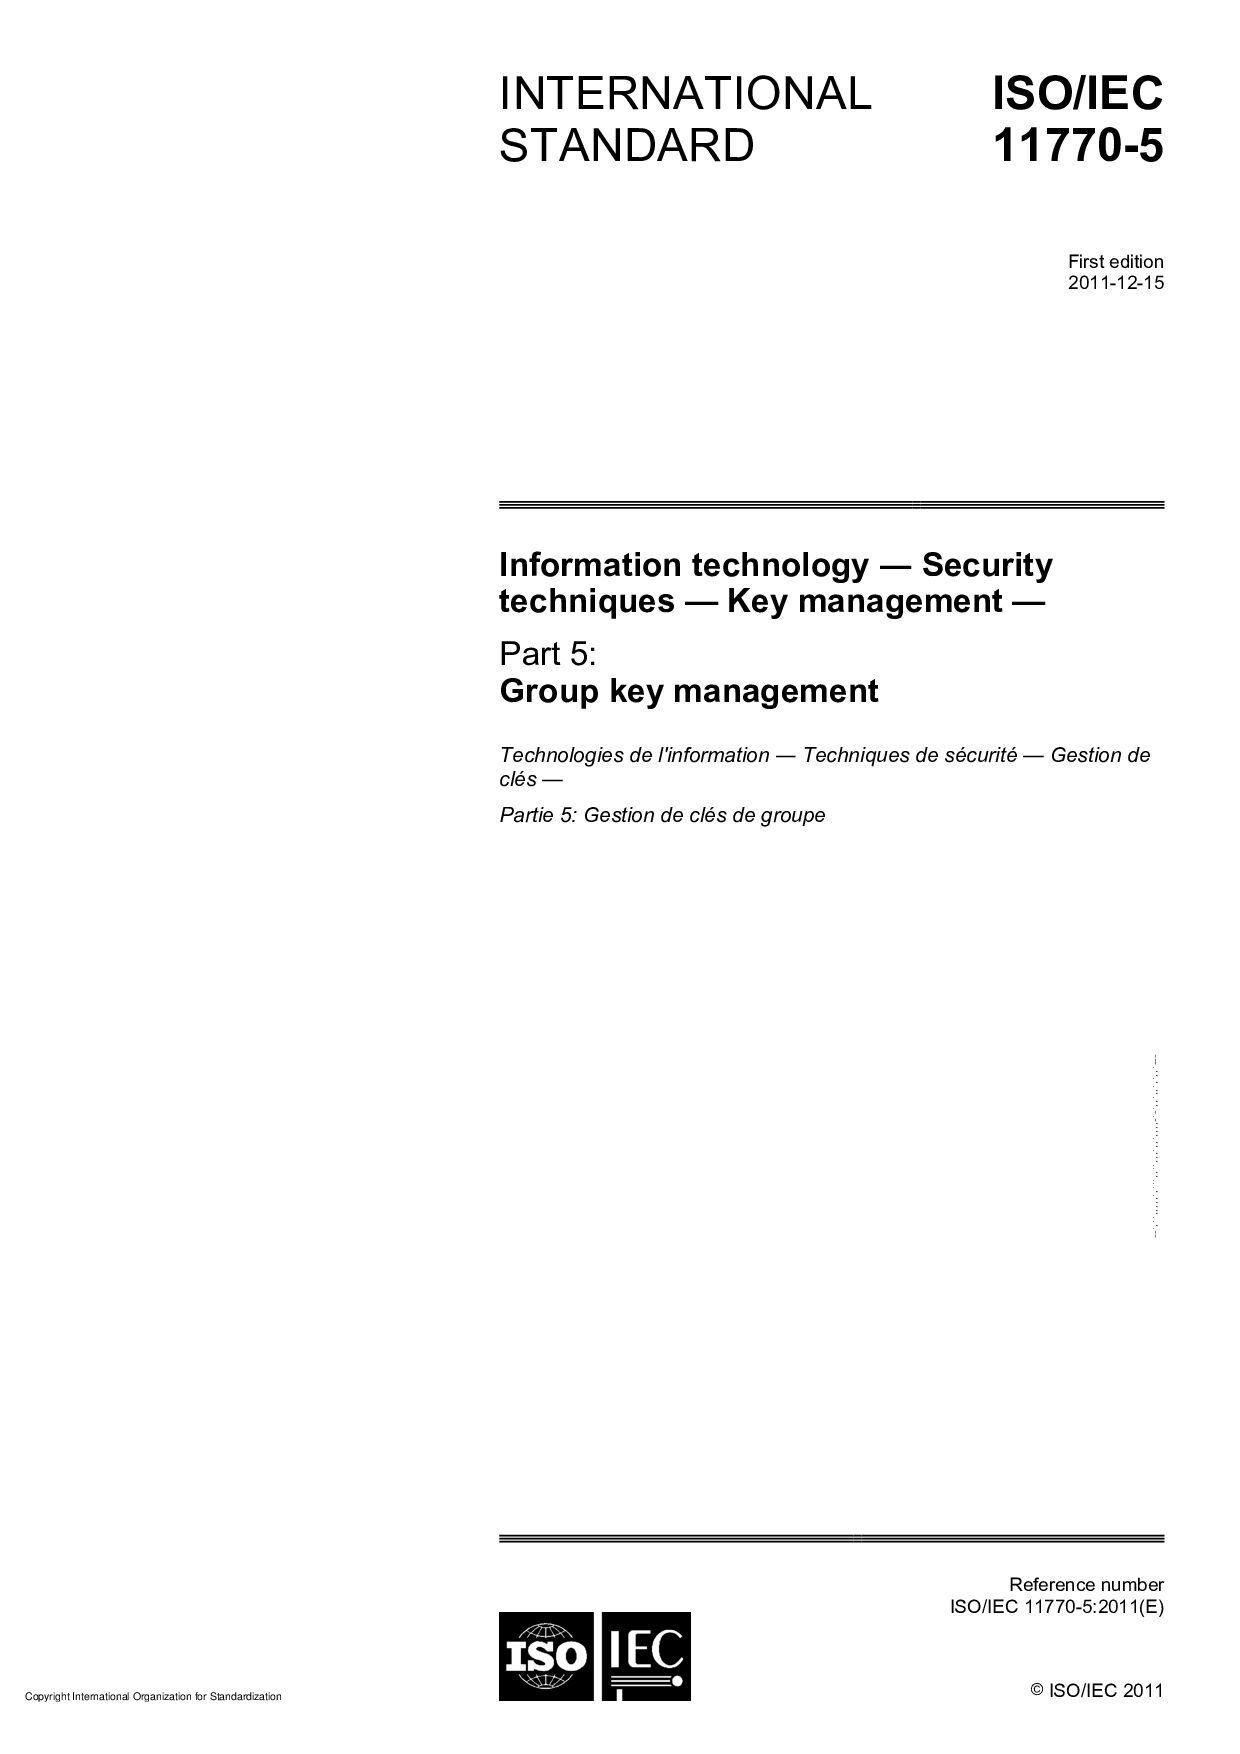 ISO/IEC 11770-5:2011